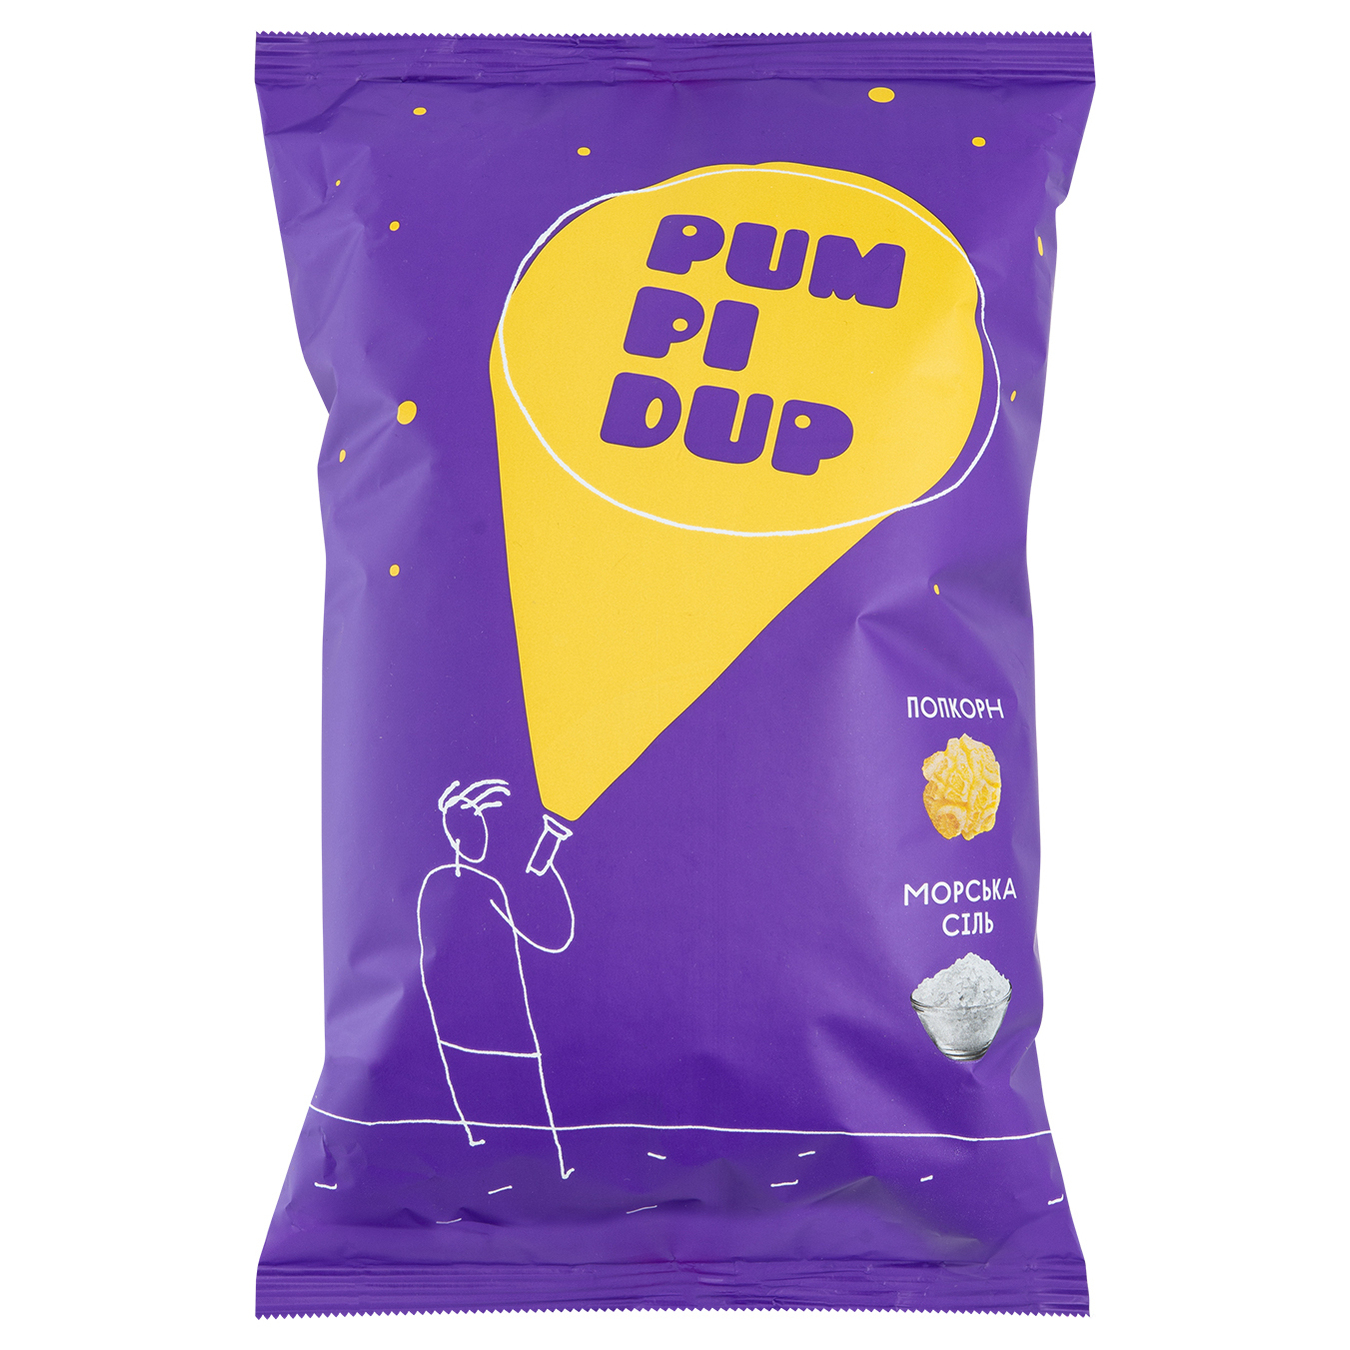 Pumpidup Pop-corn with sea salt flavor 90g